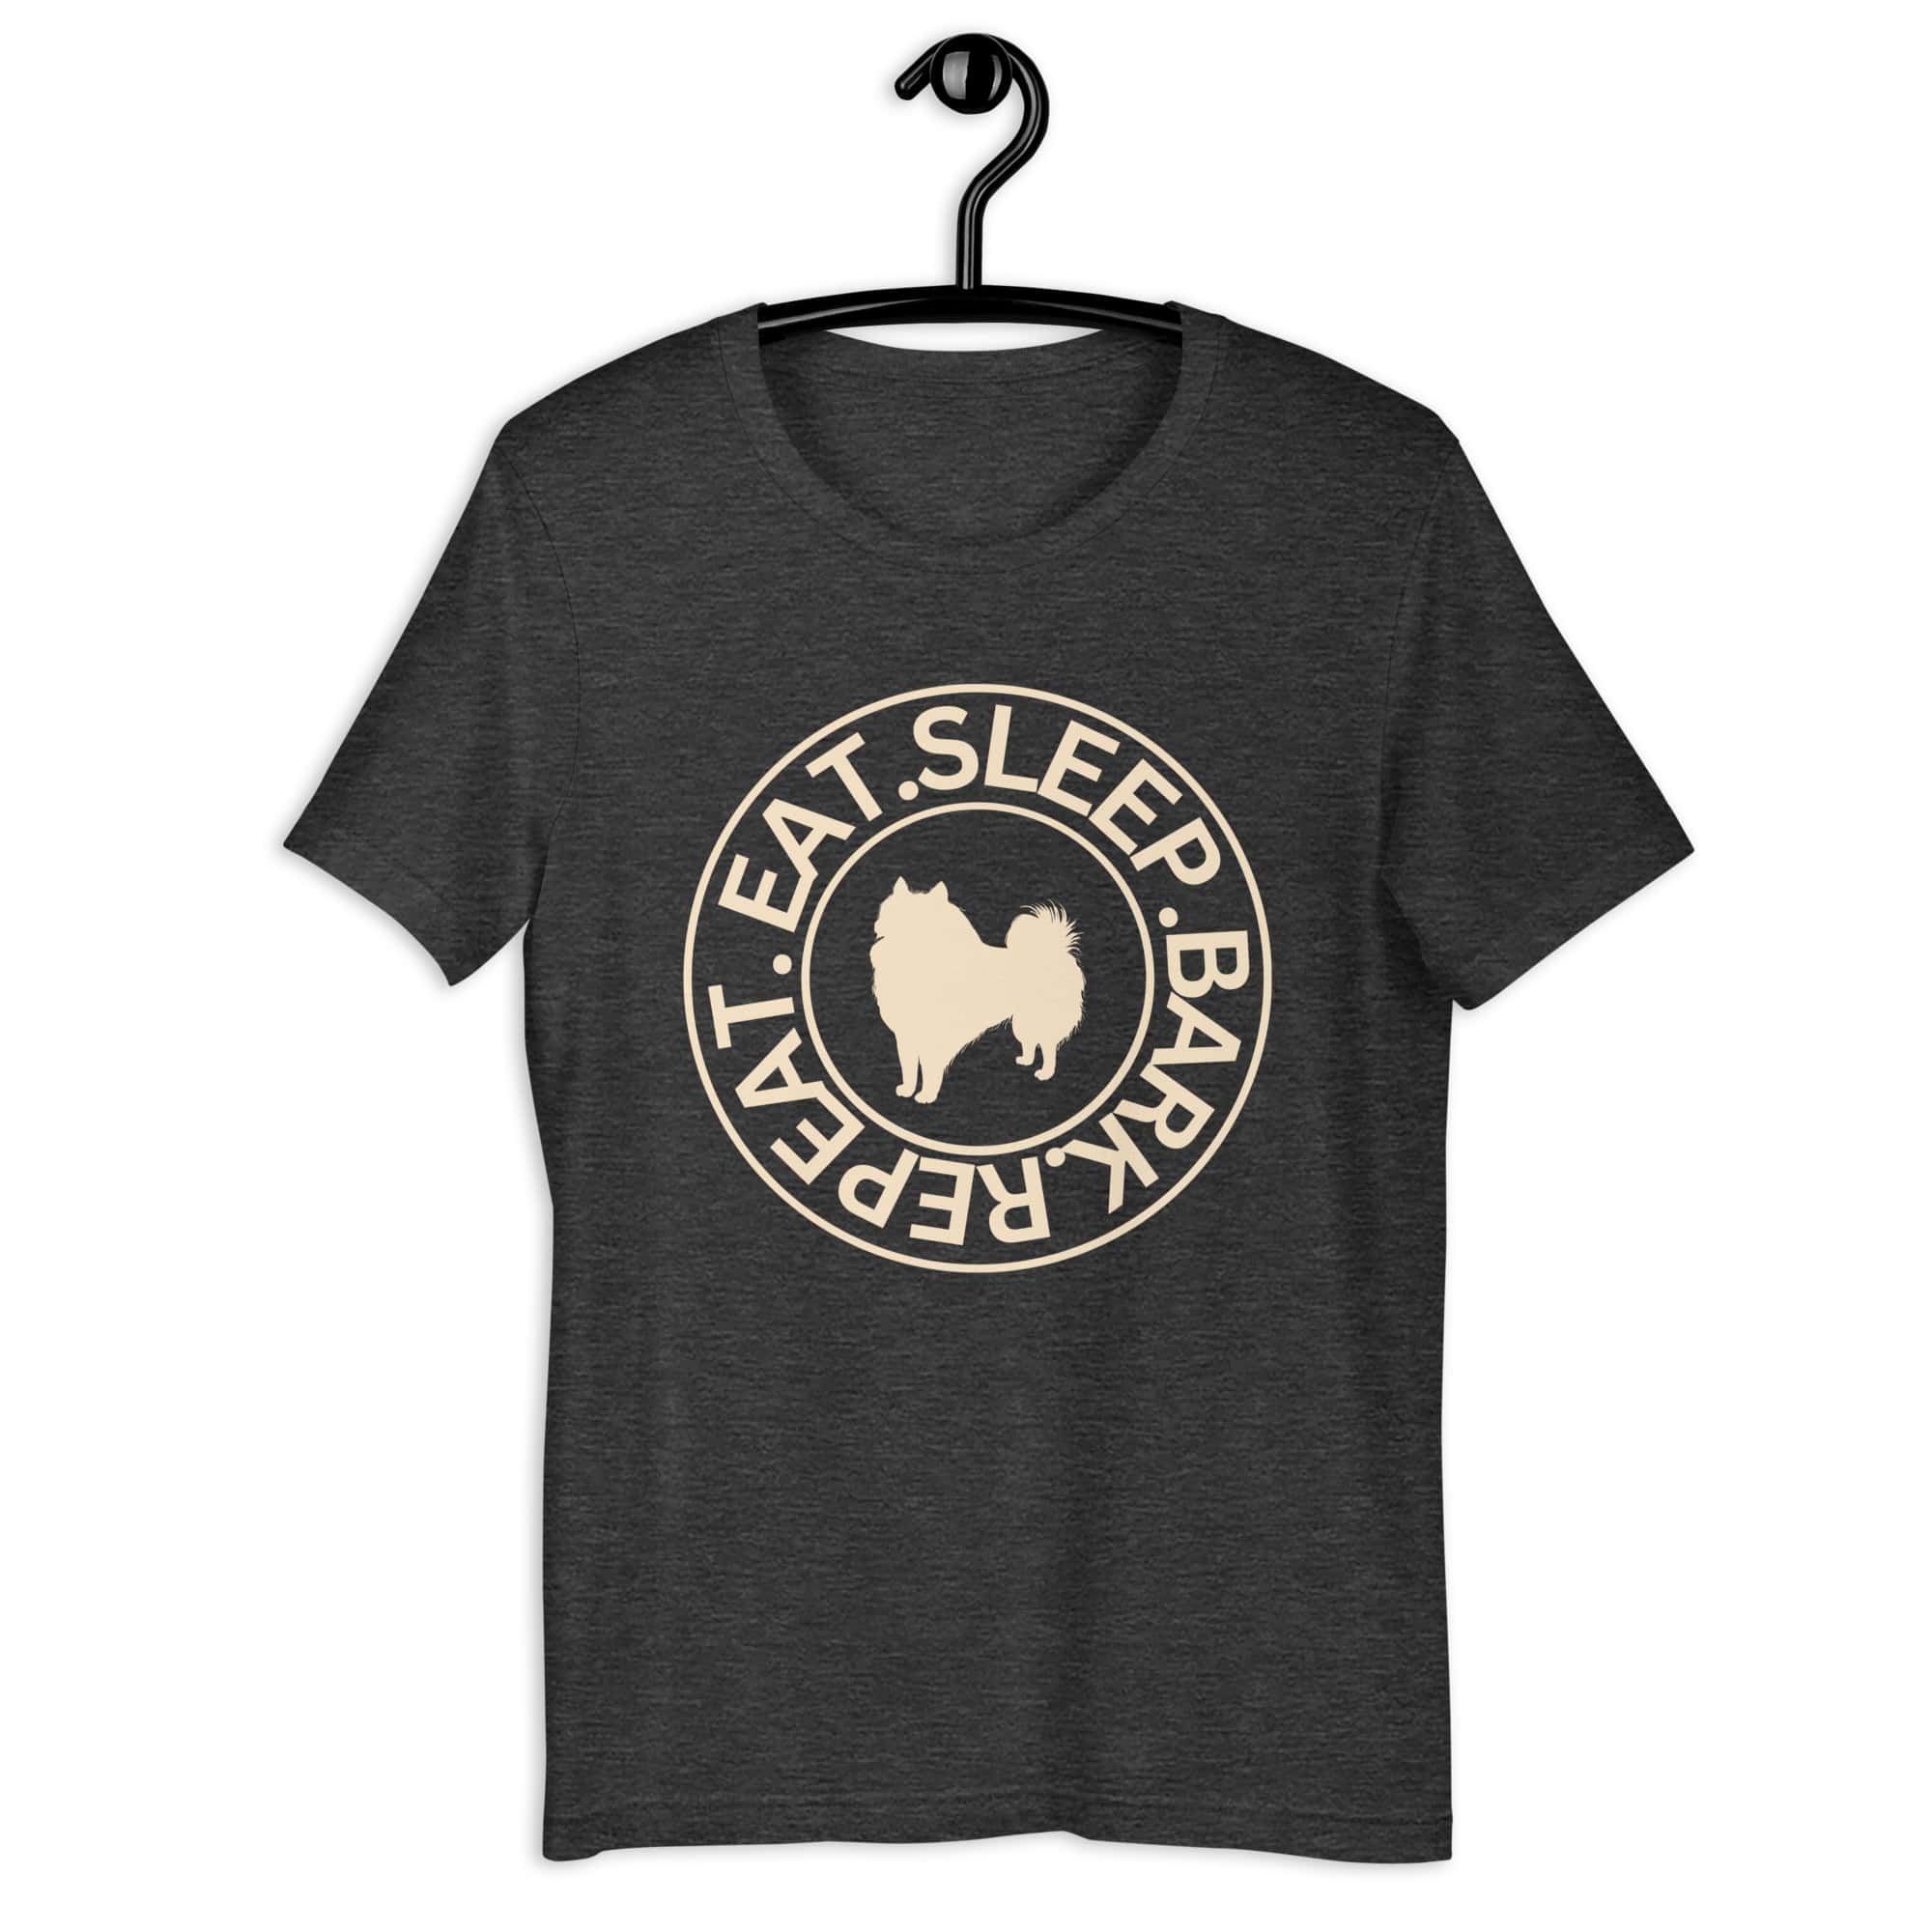 Eat Sleep Bark Repeat Poodle Unisex T-Shirt. Dark Grey